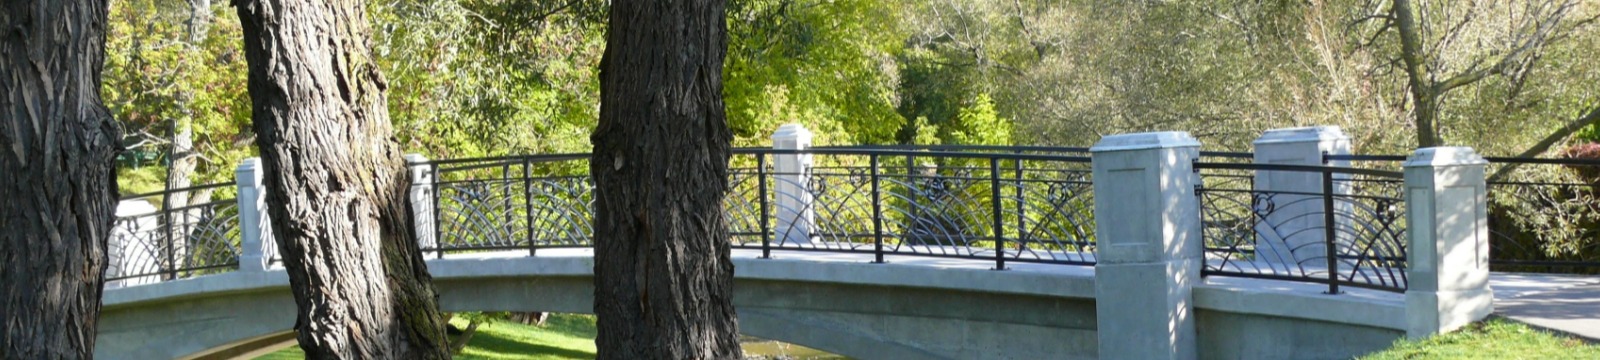 Bridge in Oshawa Valley Botanical Gardens